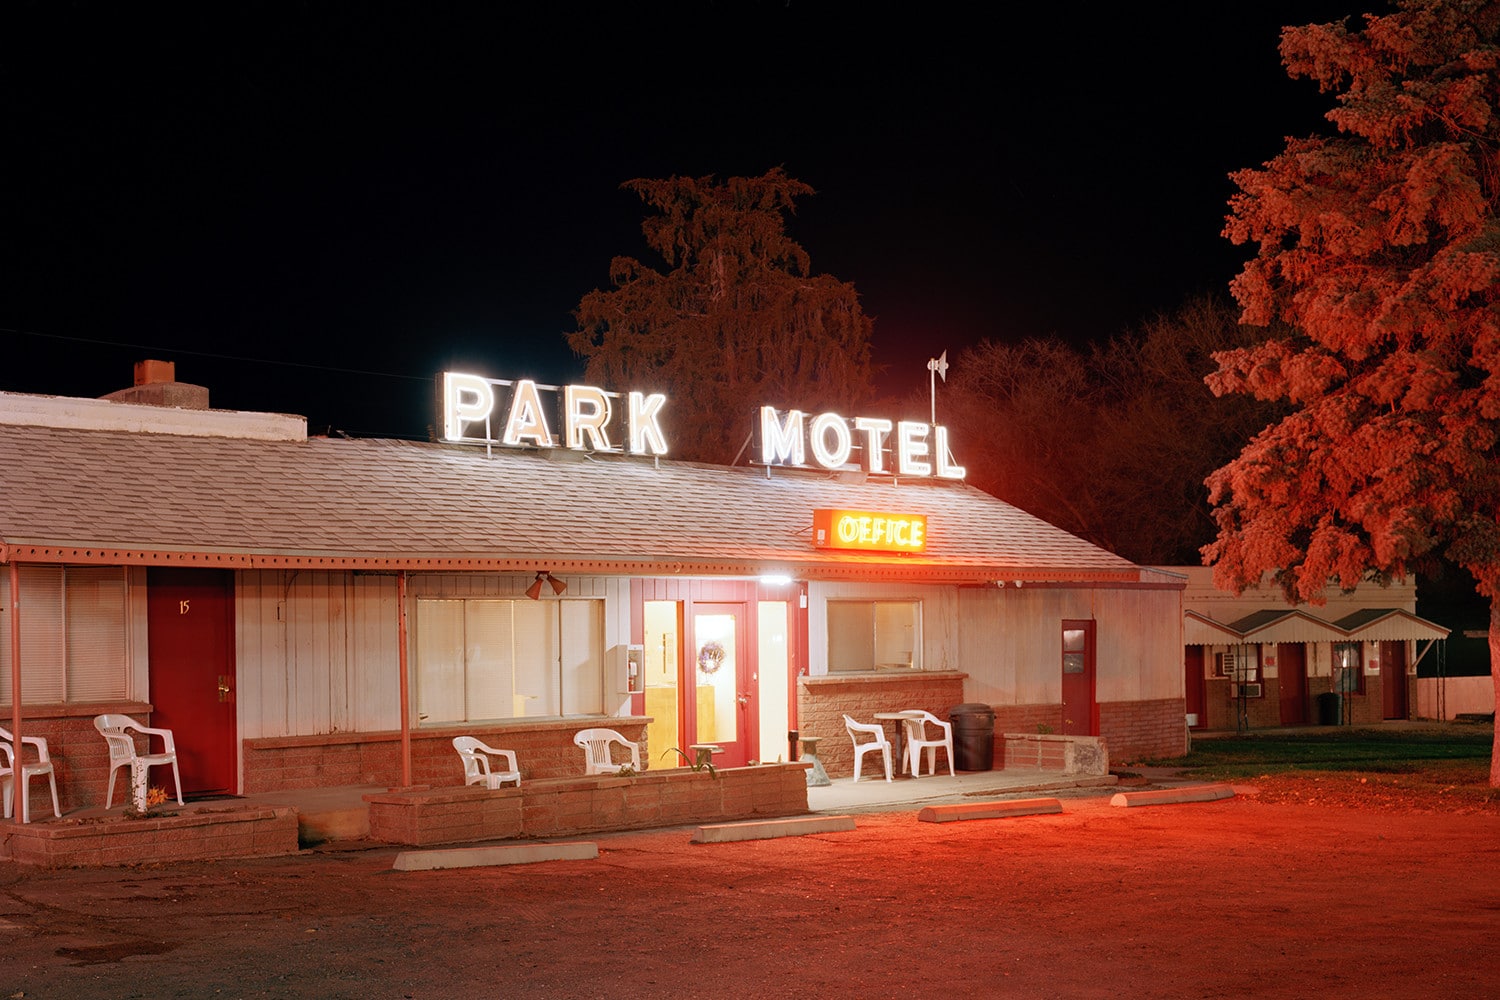 David Egan’s Night Photography of Rural Nevada